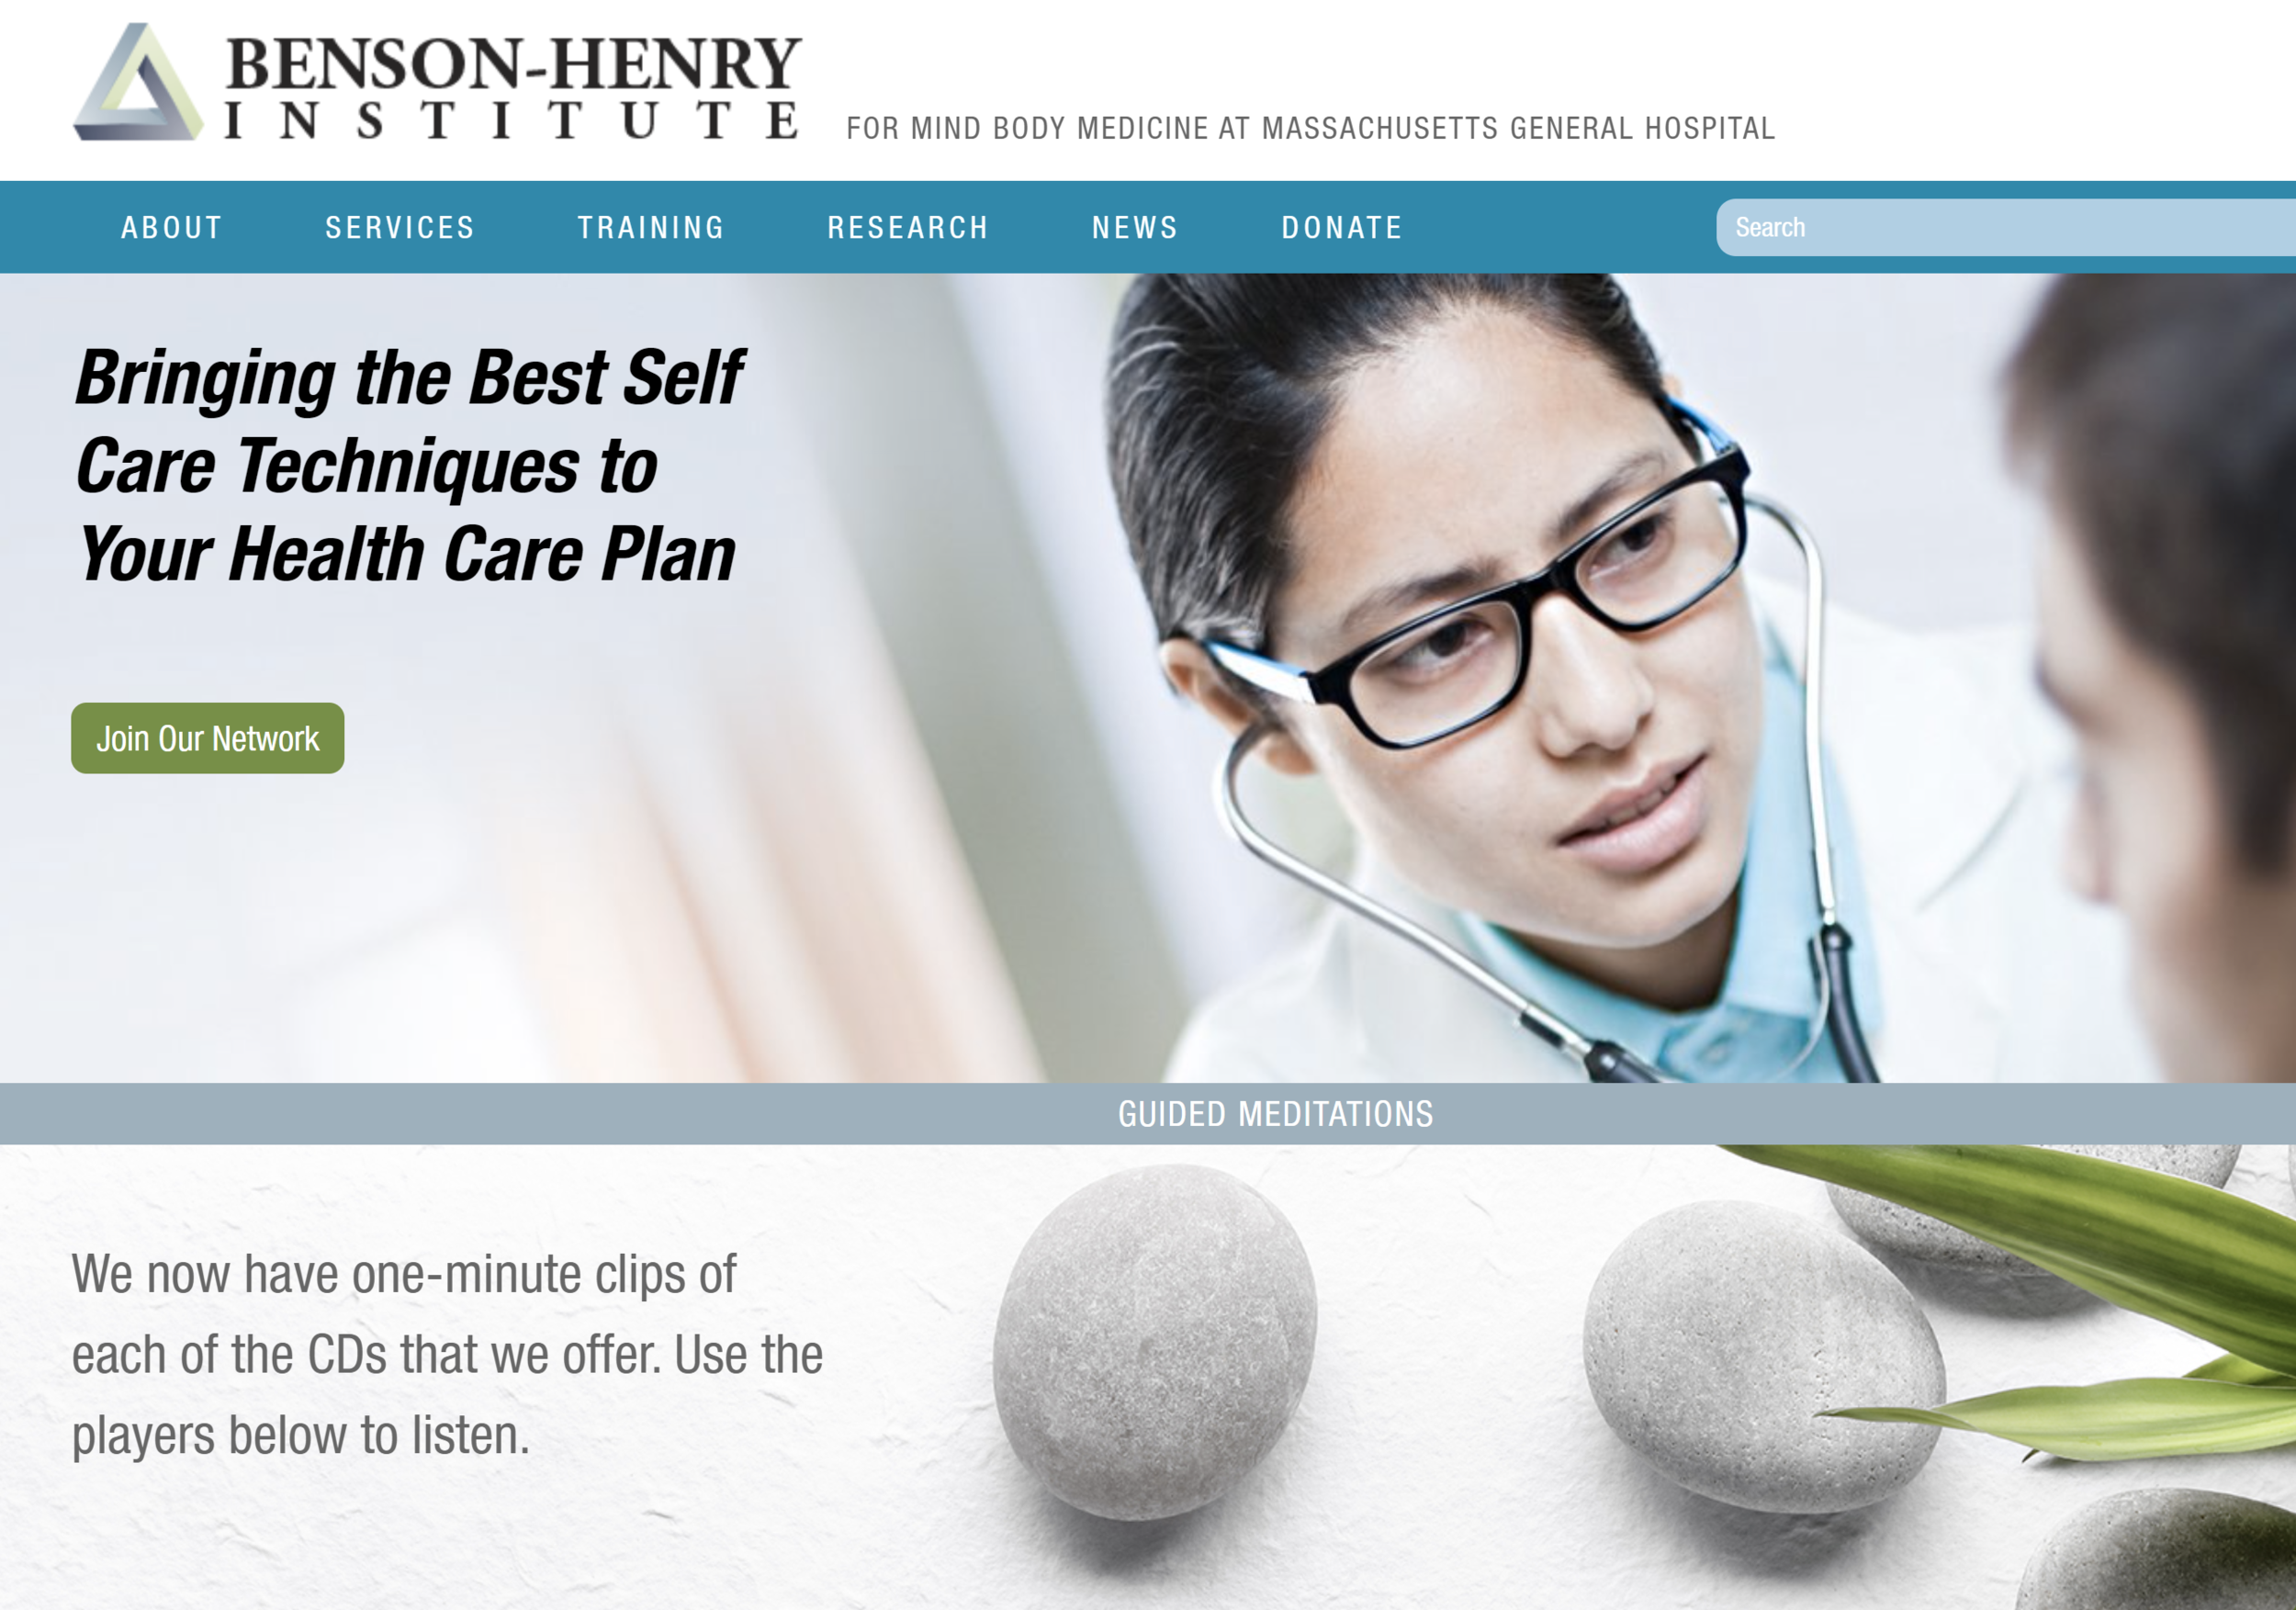 Benson-Henry Institute for Mind-Body Medicine